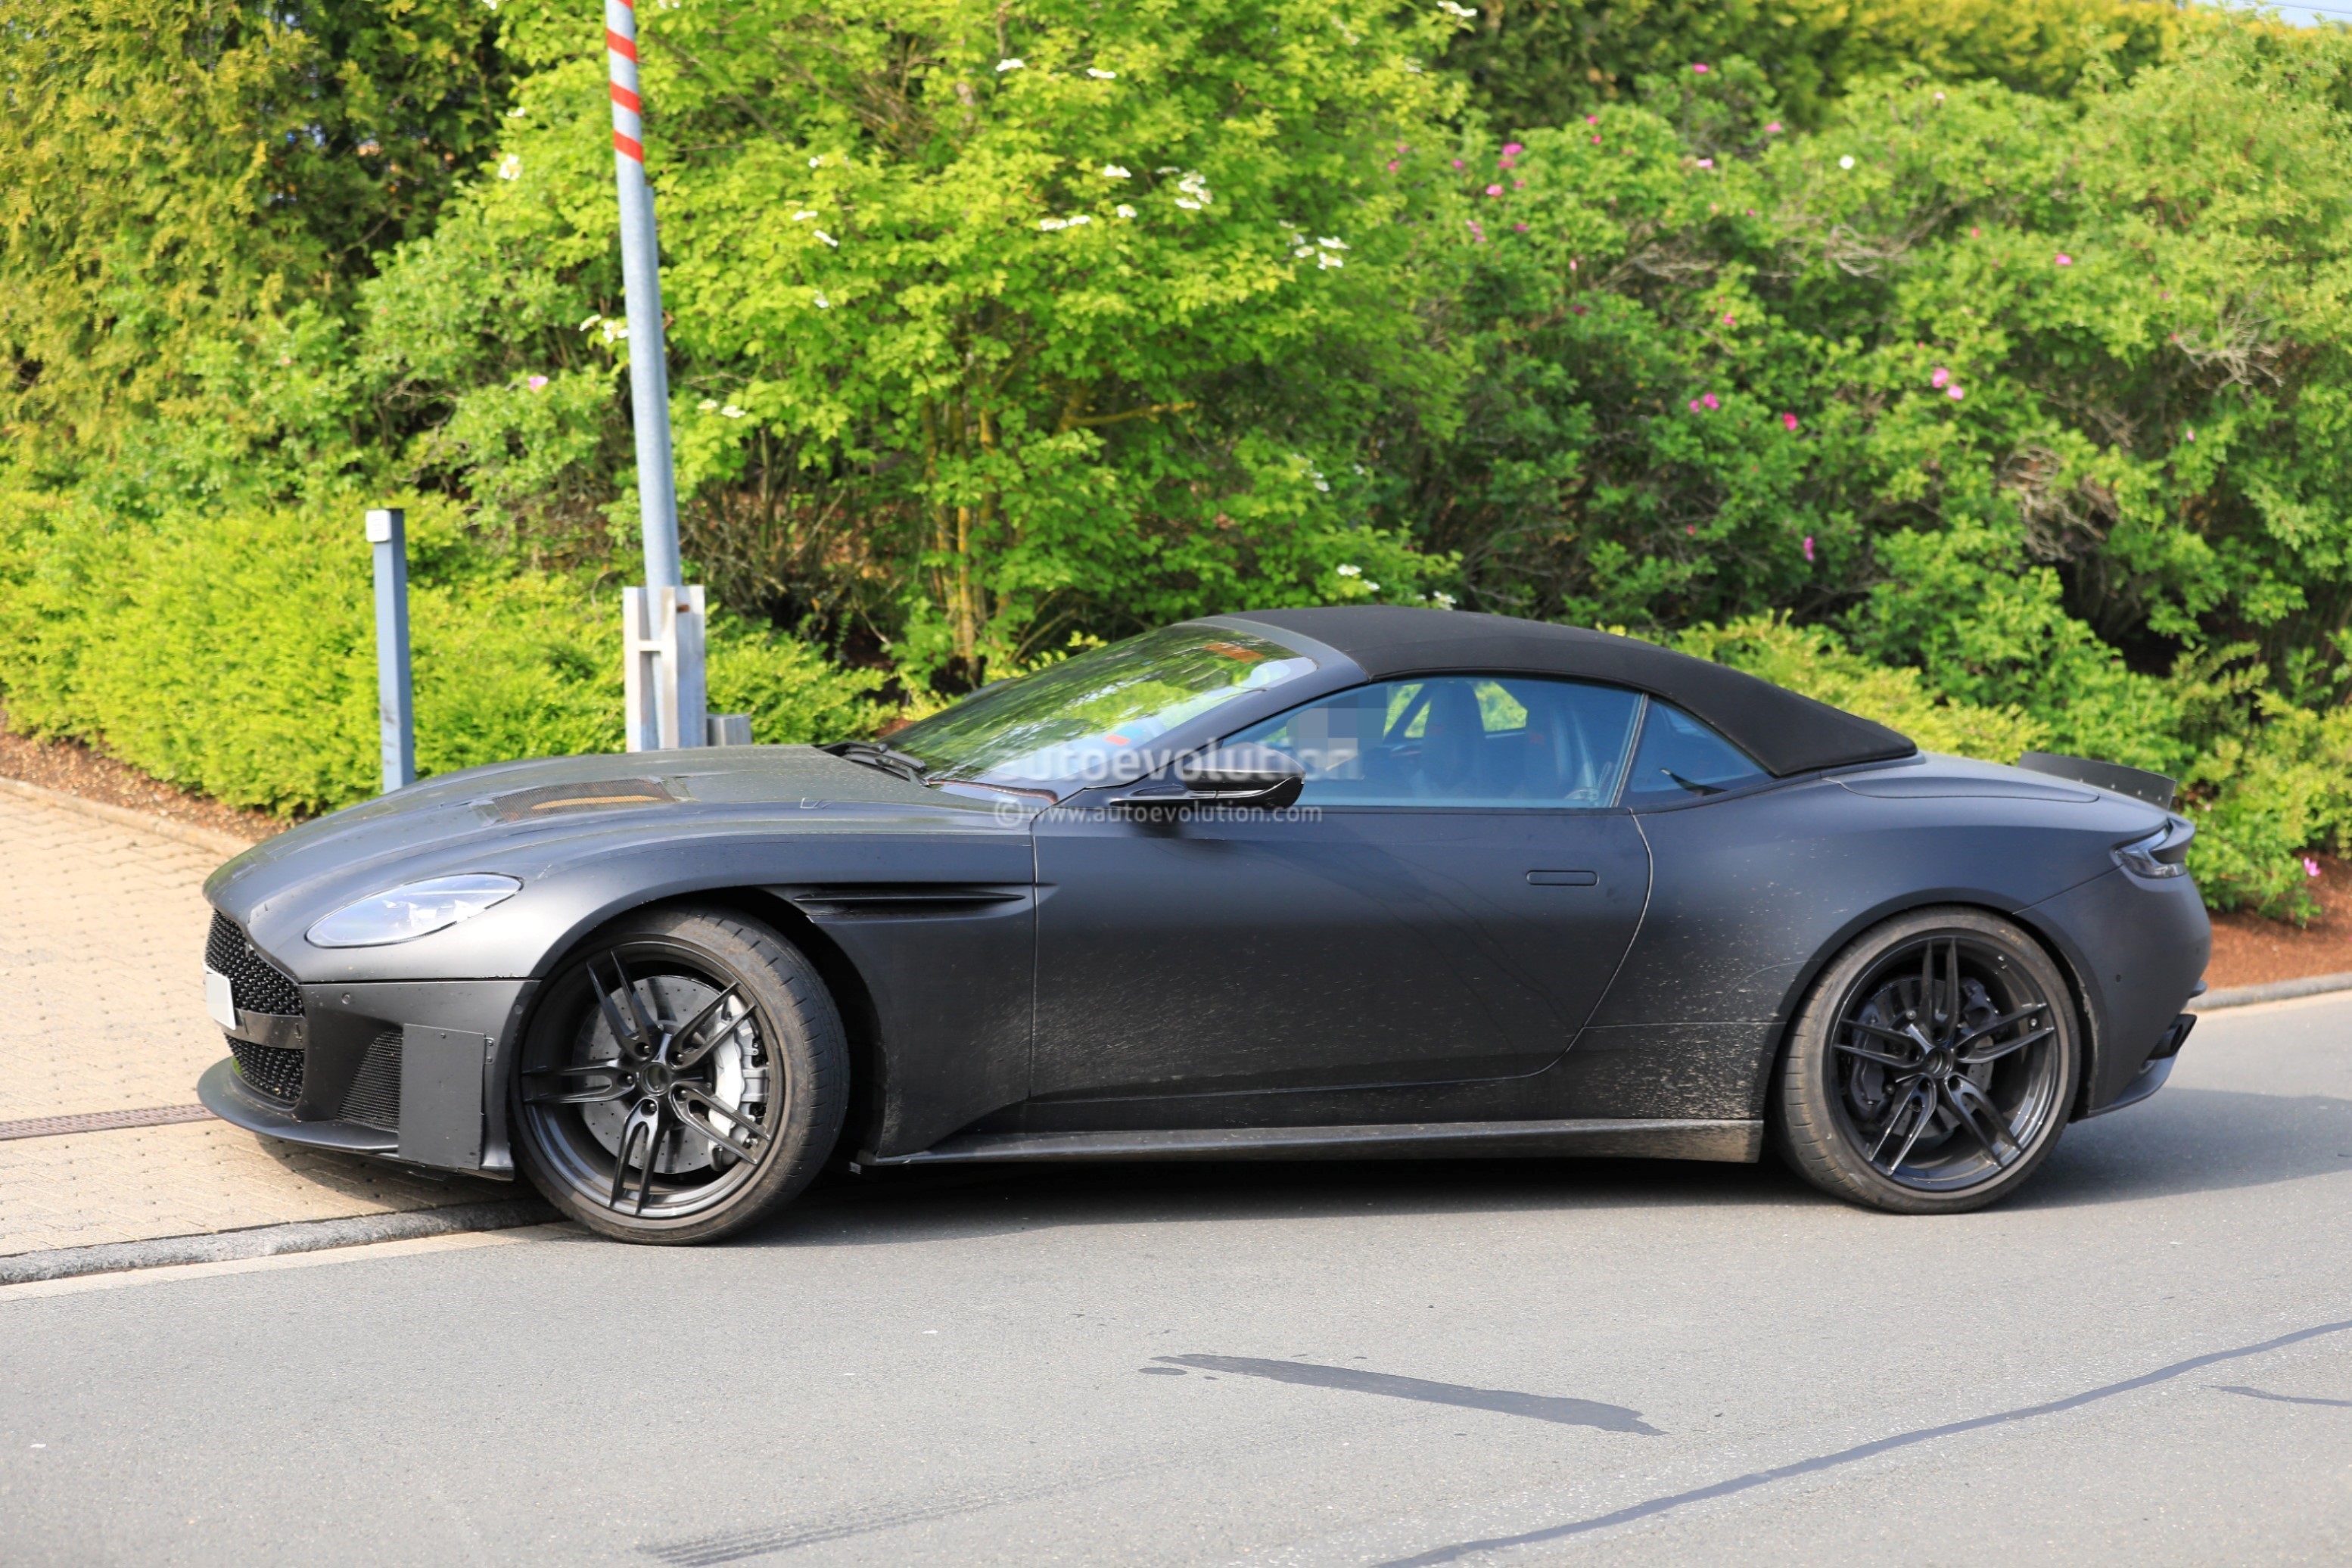 Aston Martin DBS Superleggera exterior restyling